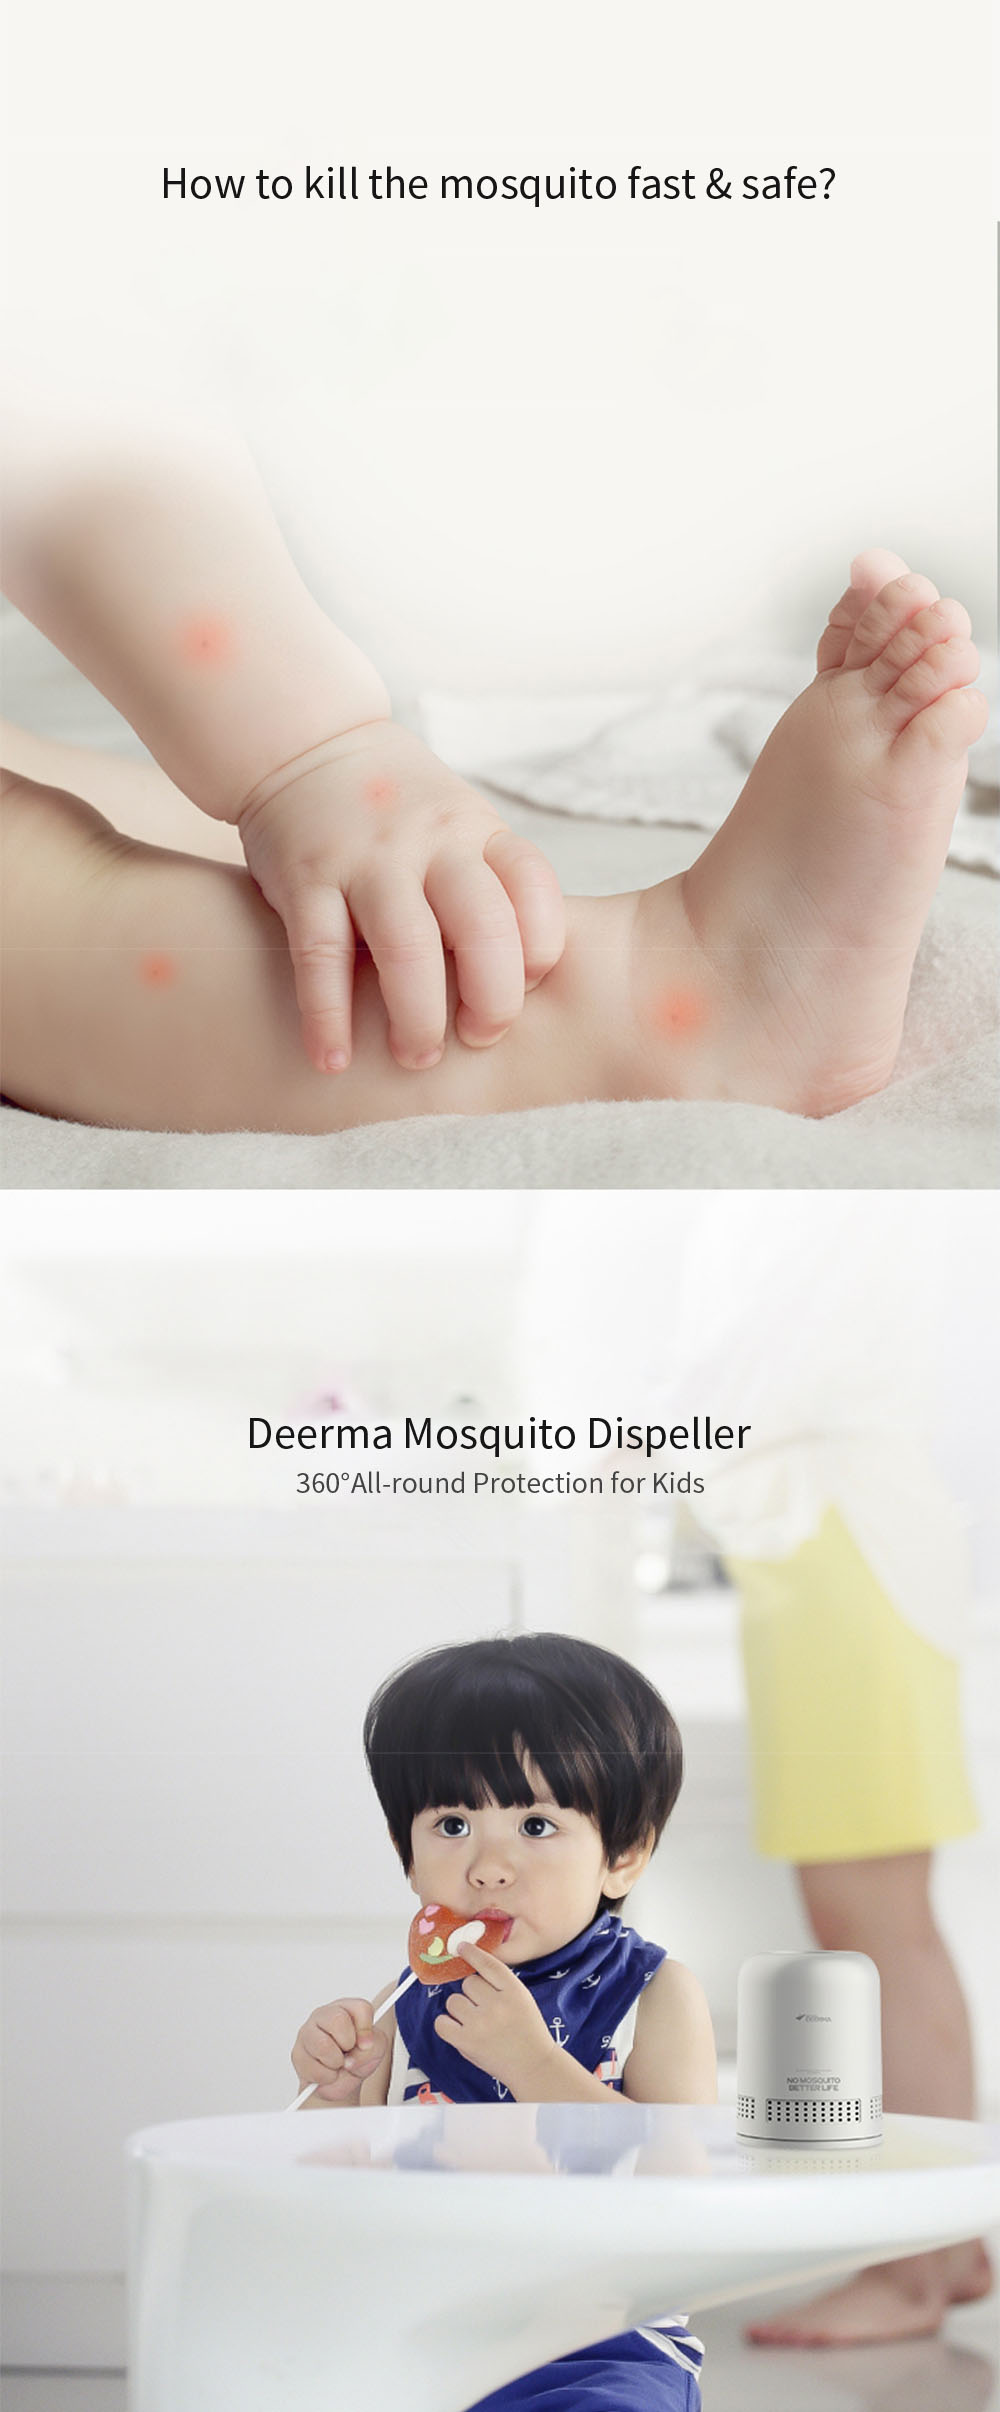 Xiaomi-Deeama-DEM-ZW100-Mosquito-Dispeller-Indoor-Outdoor-Household-Radiation-Free-Silent-Electronic-1403196